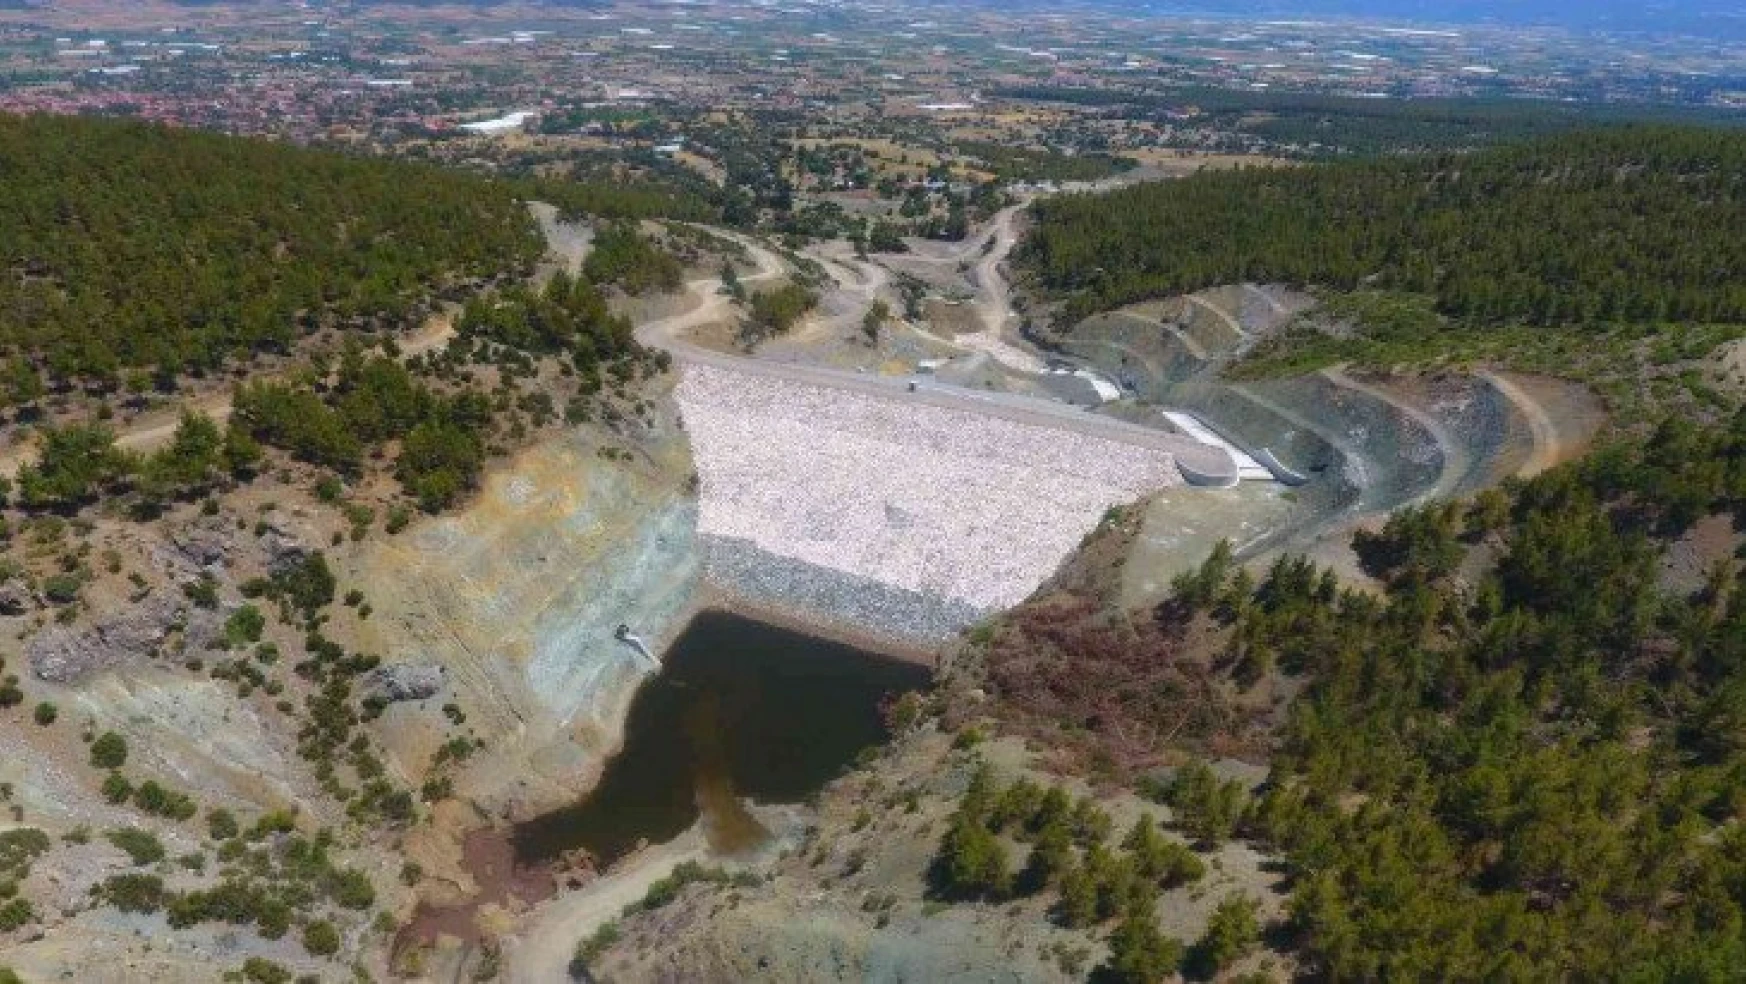 Burdur Gölhisar Yusufca Barajı tamamlanarak su tutulmasına başlandı